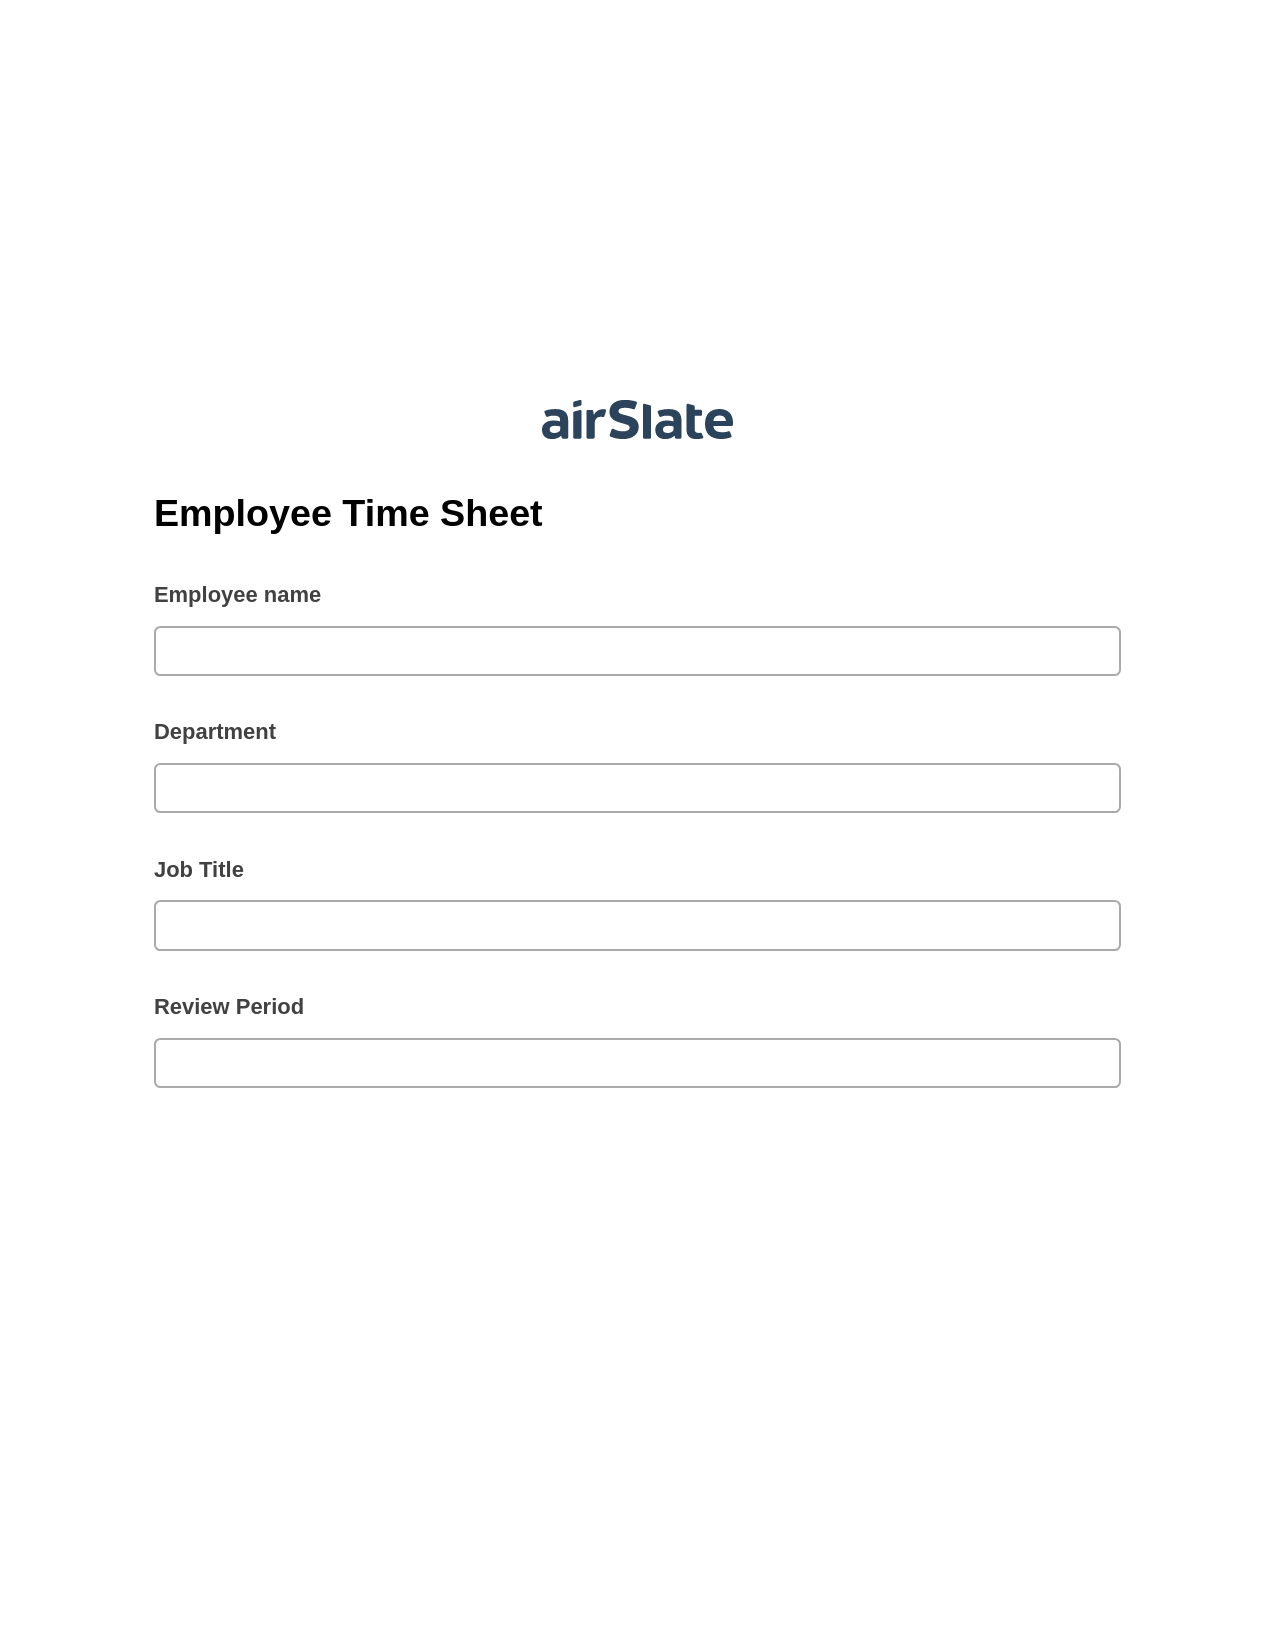 Employee Time Sheet Pre-fill from CSV File Bot, Create Salesforce Records Bot, Slack Two-Way Binding Bot